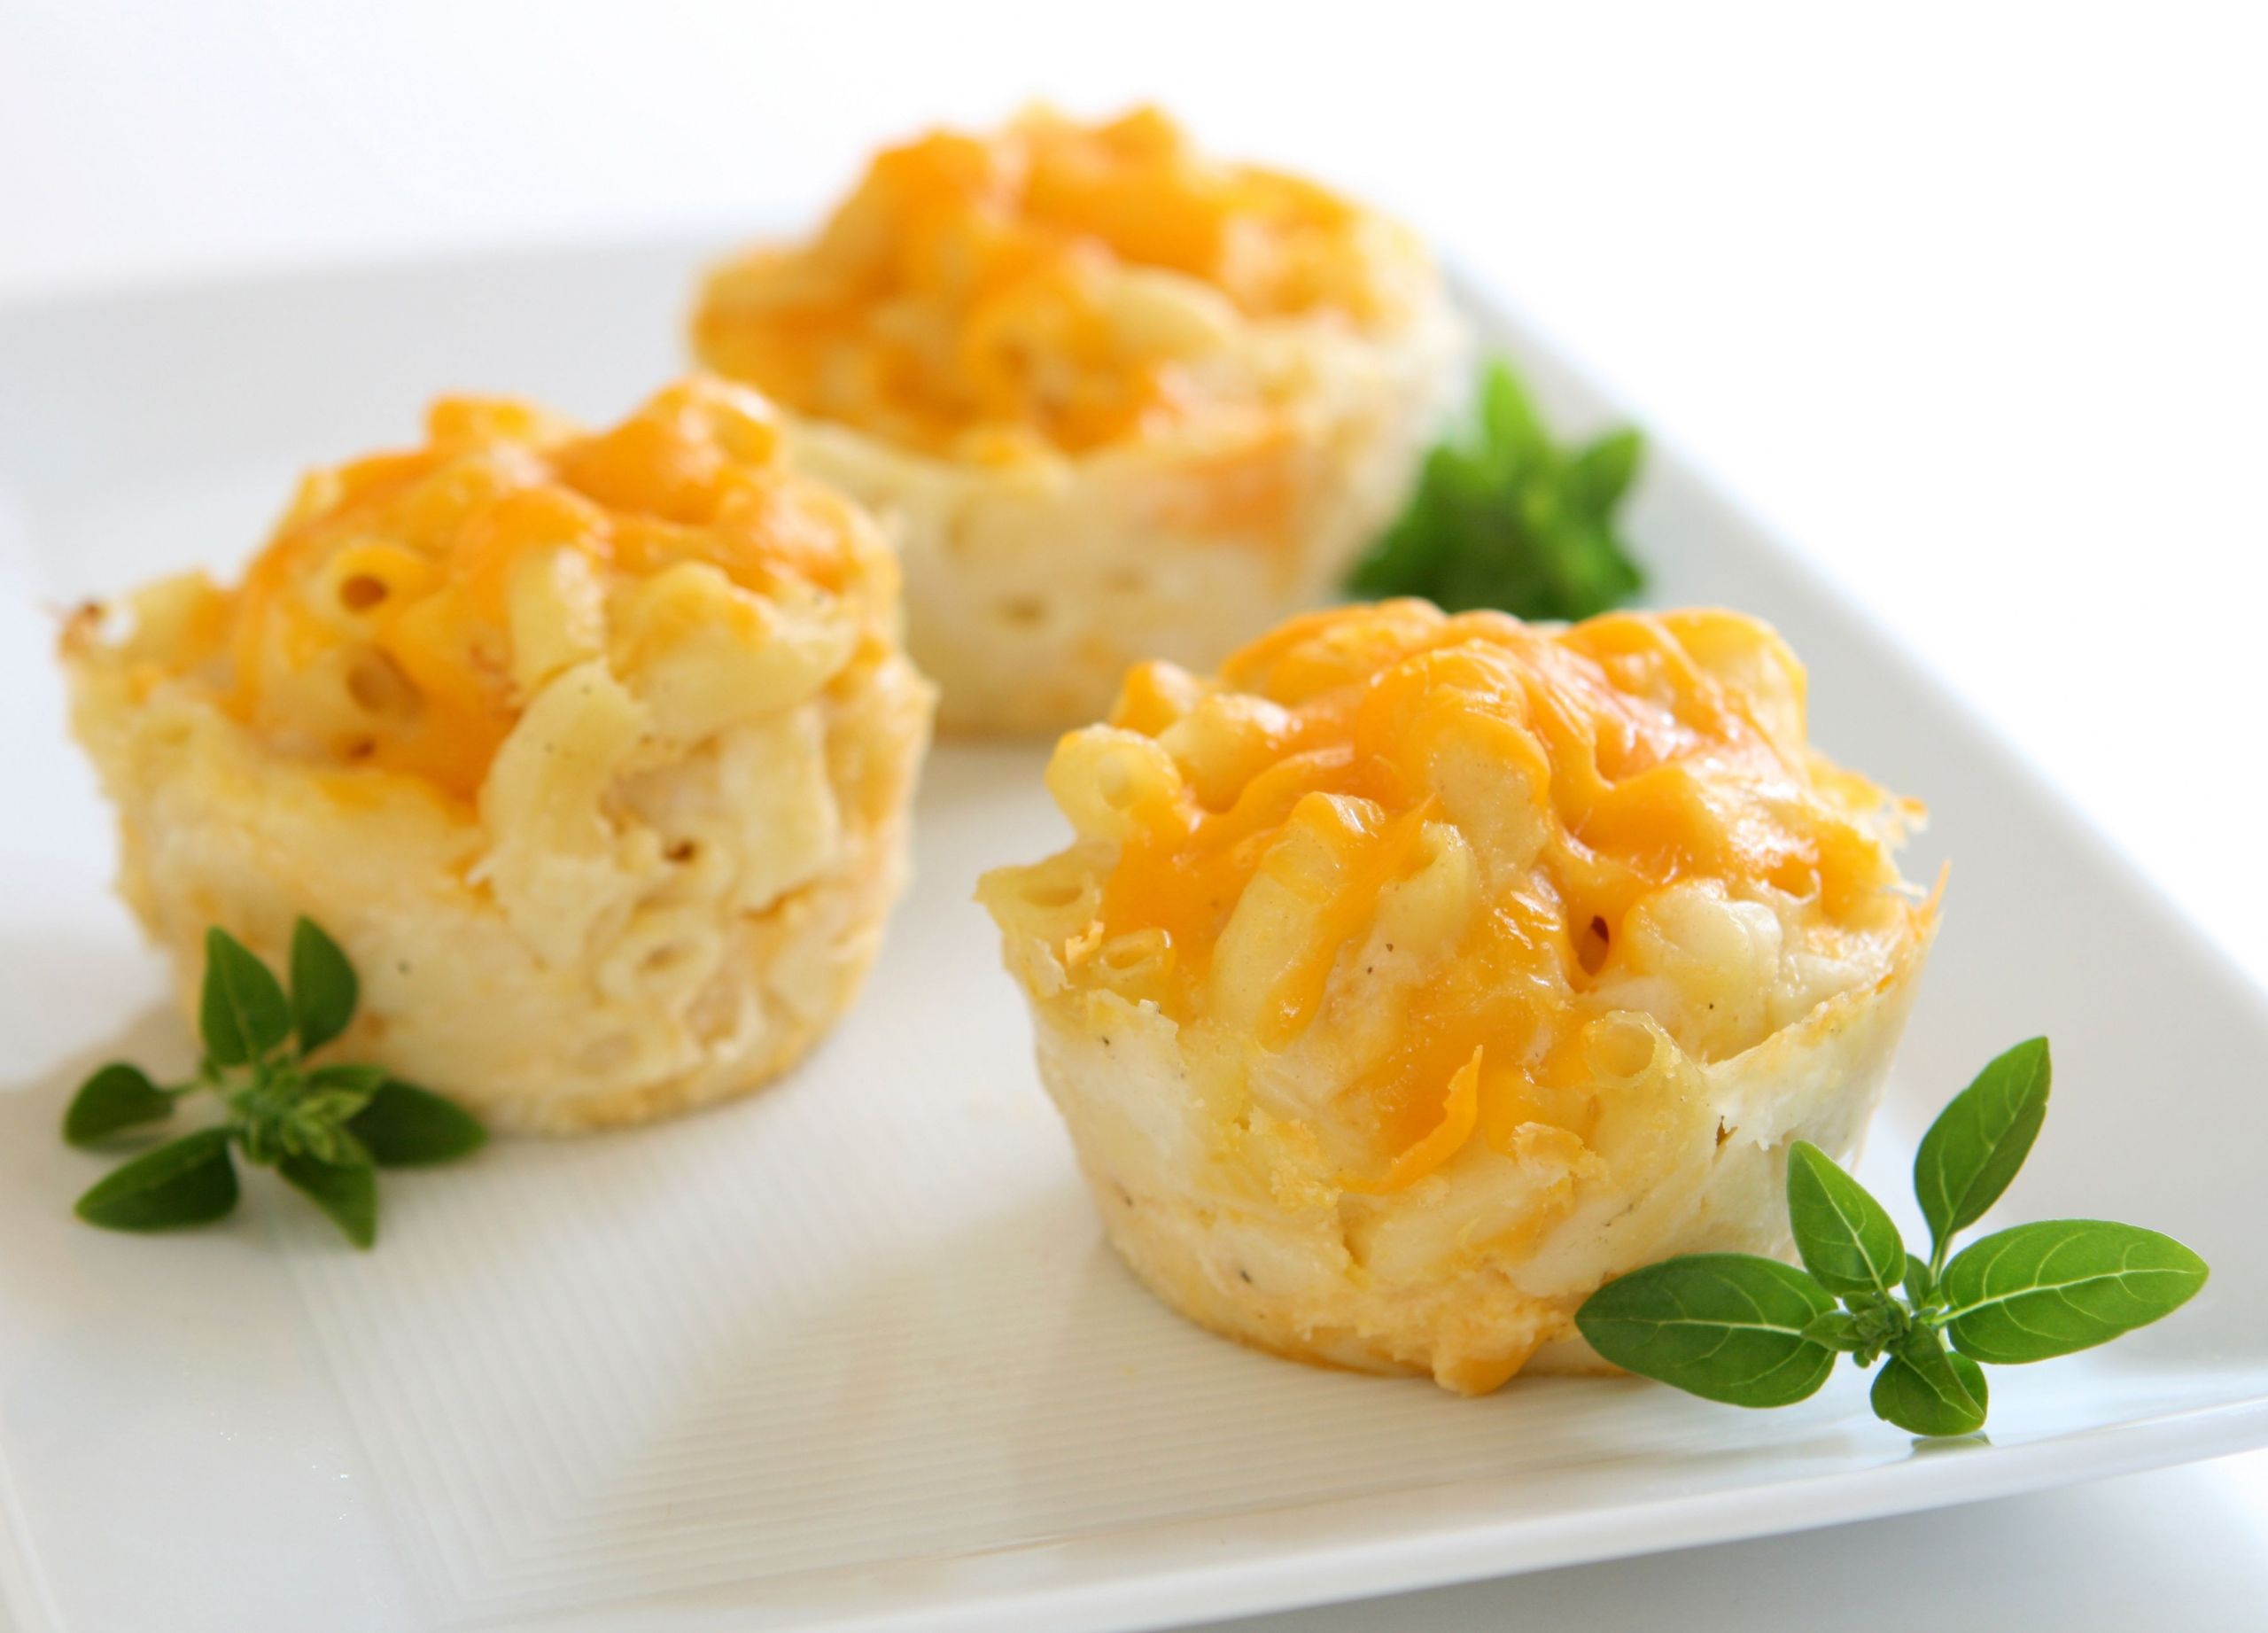 Macaroni And Cheese Cupcakes
 Macaroni And Cheese Cupcakes Recipe — Dishmaps